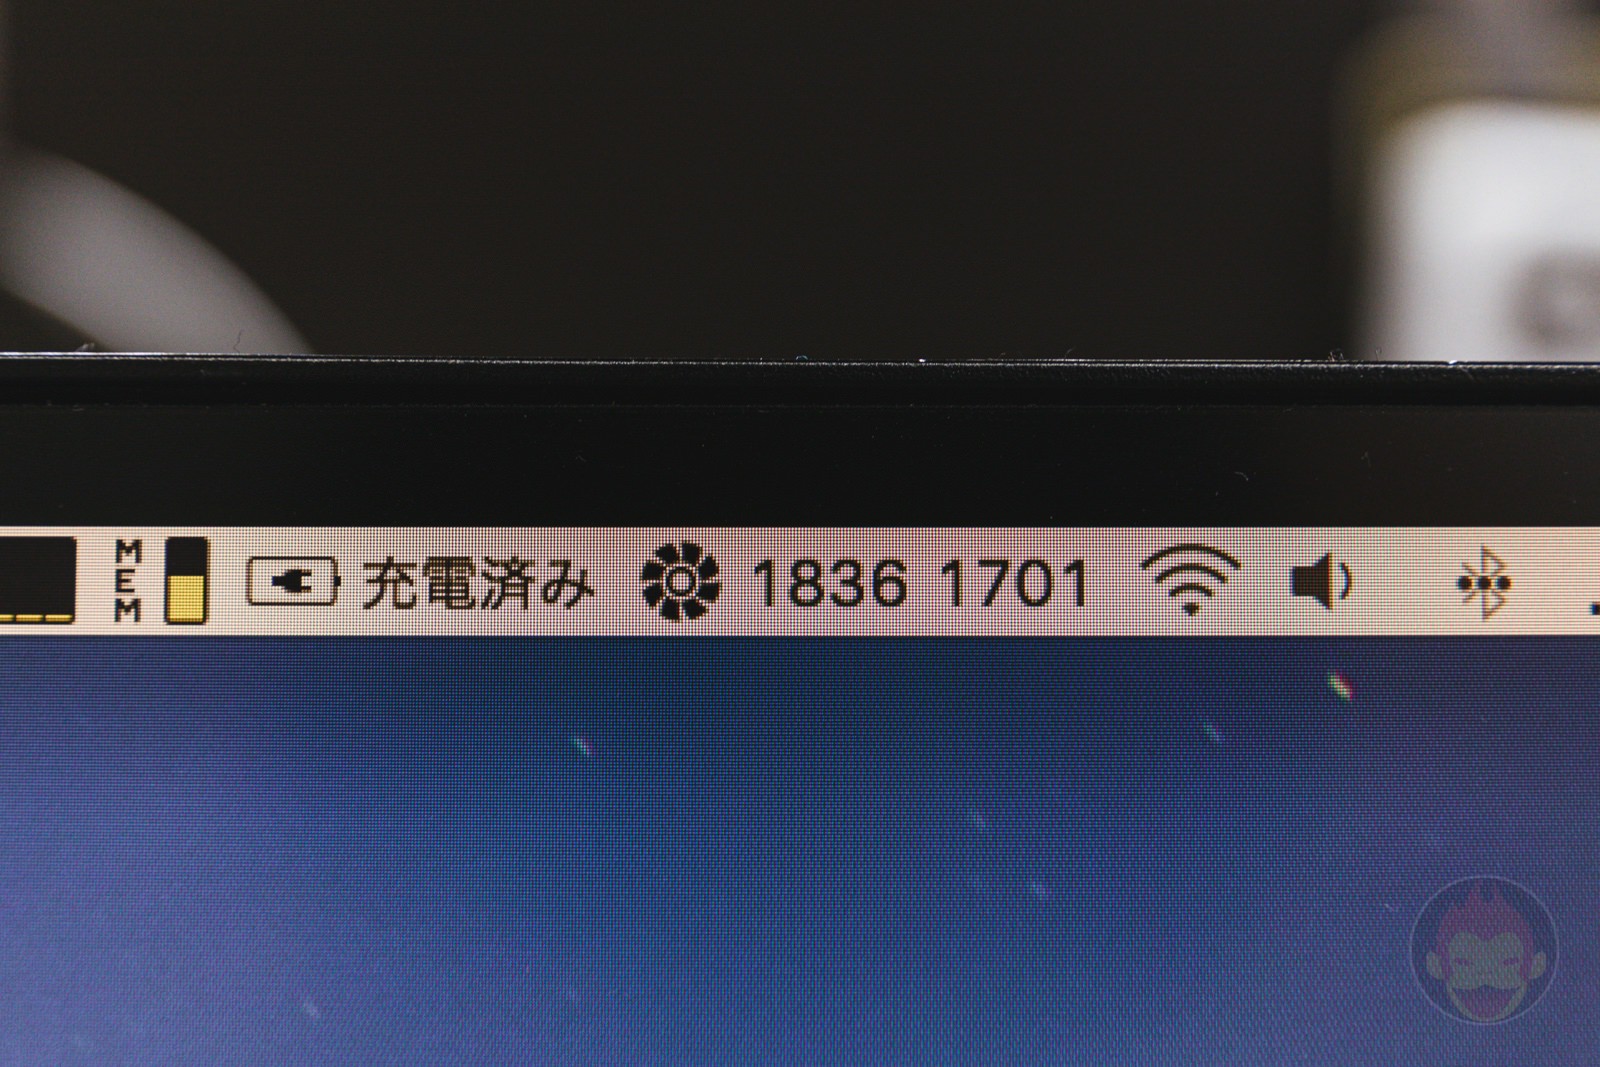 Using-eGPU-definately-changes-heat-on-MacBookPro-08.jpg